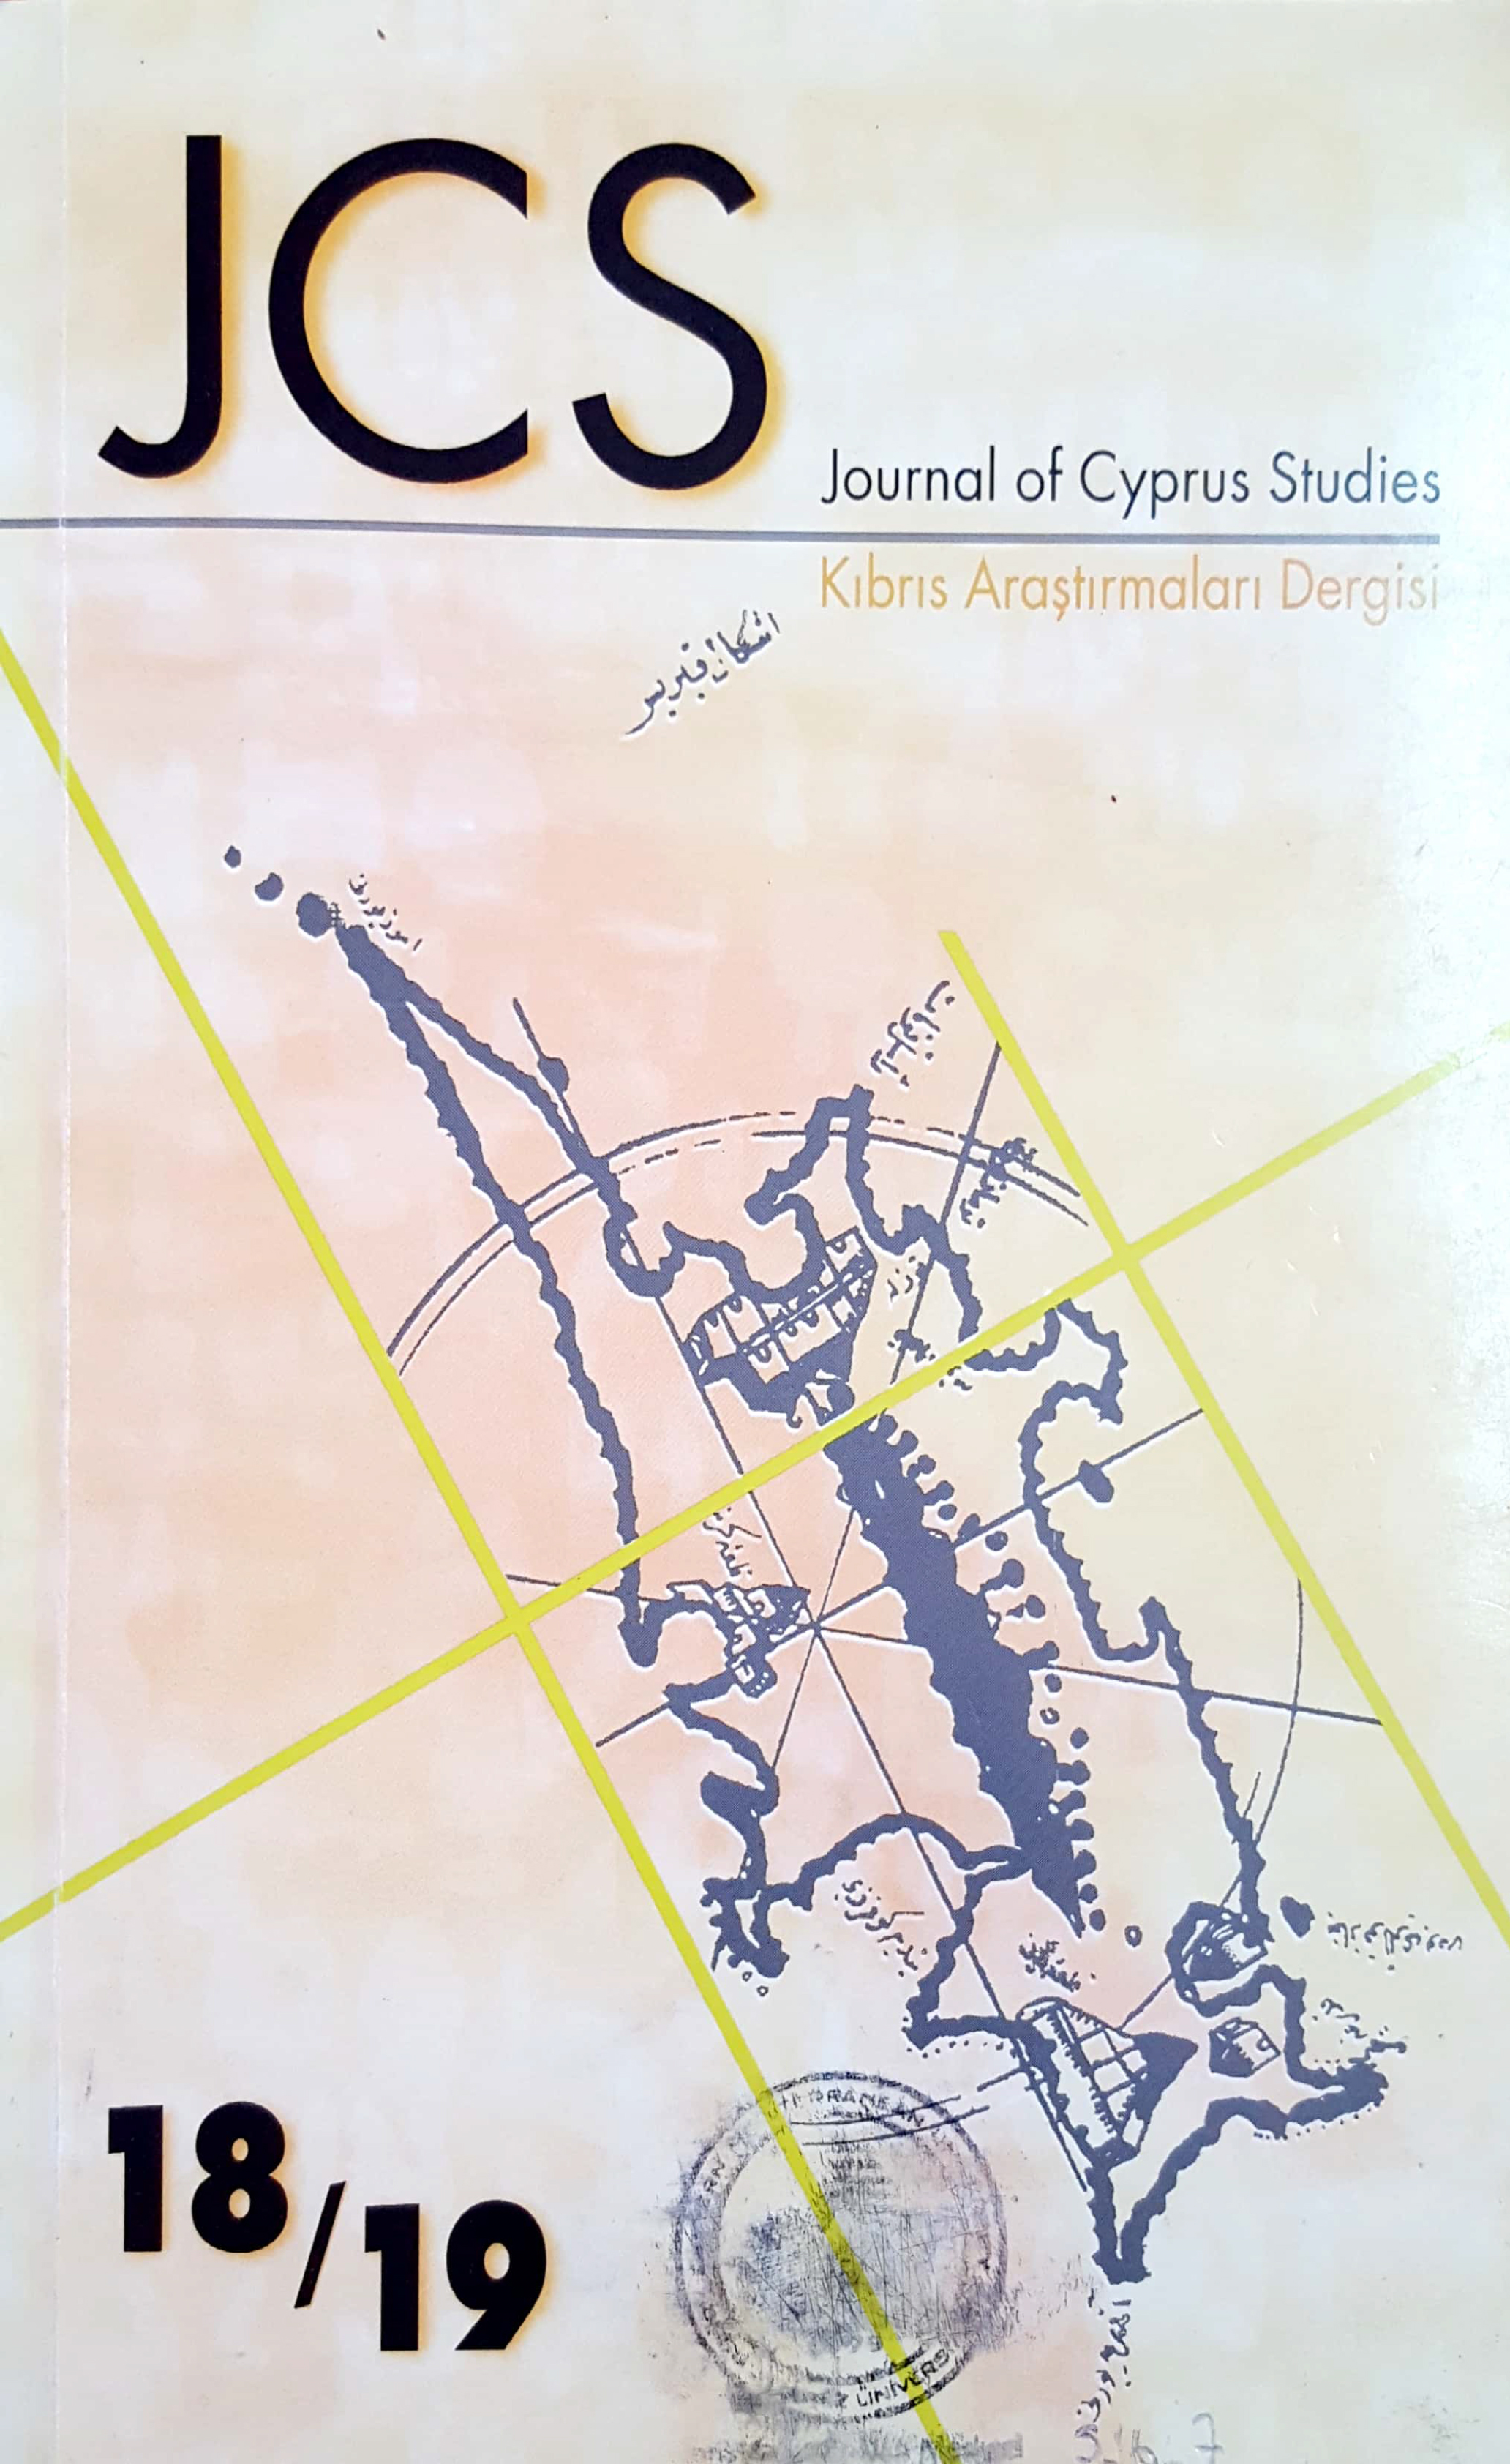 					View Vol. 6 No. 18/19 (2000): Journal of Cyprus Studies
				